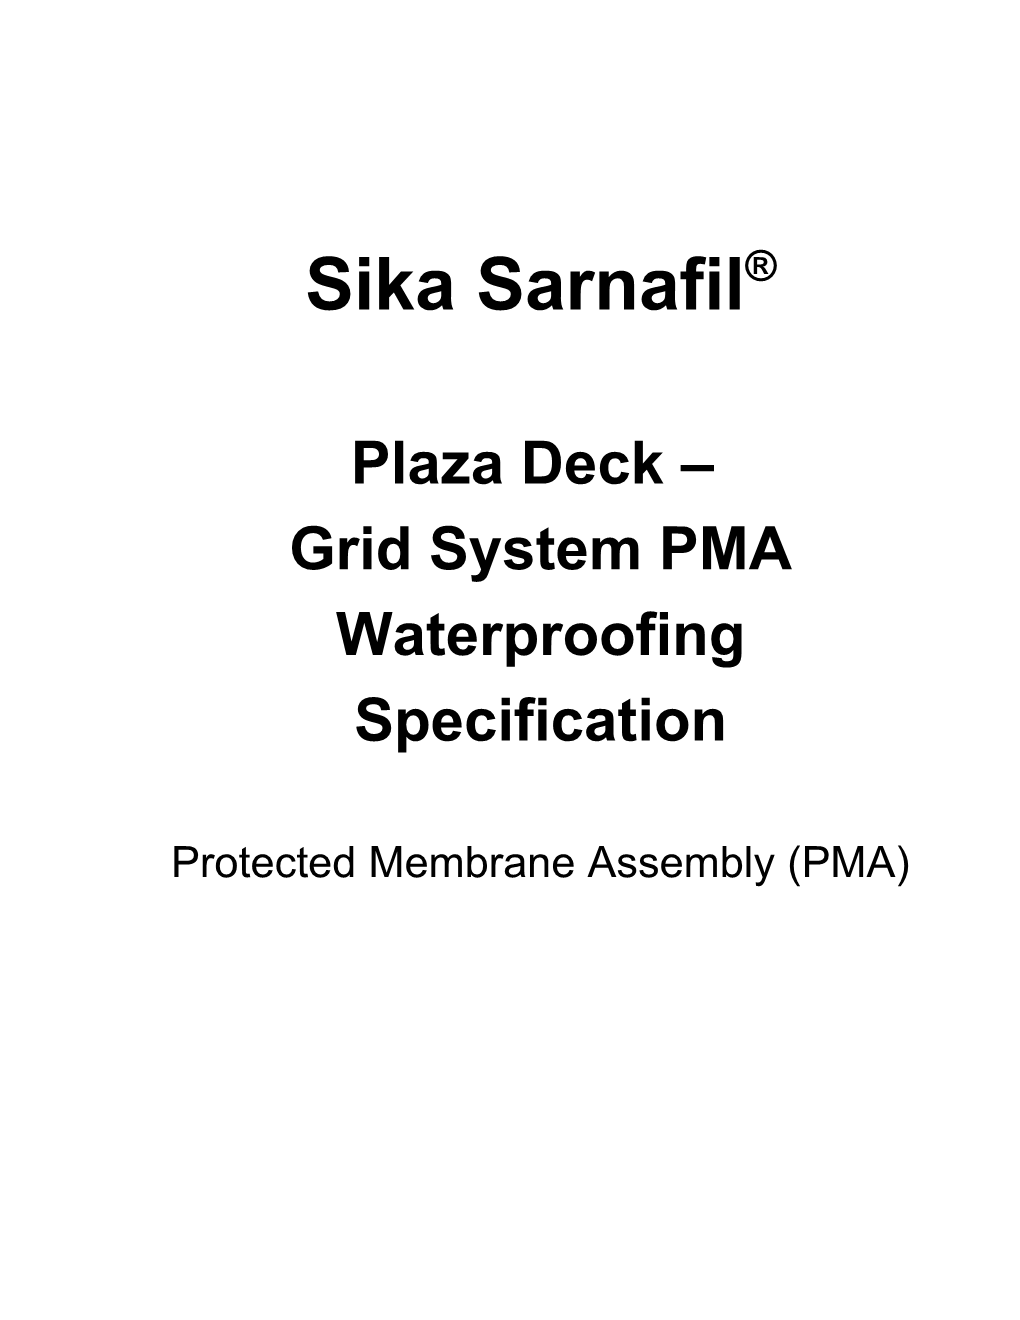 Sarnafil Guide Specification Grid System